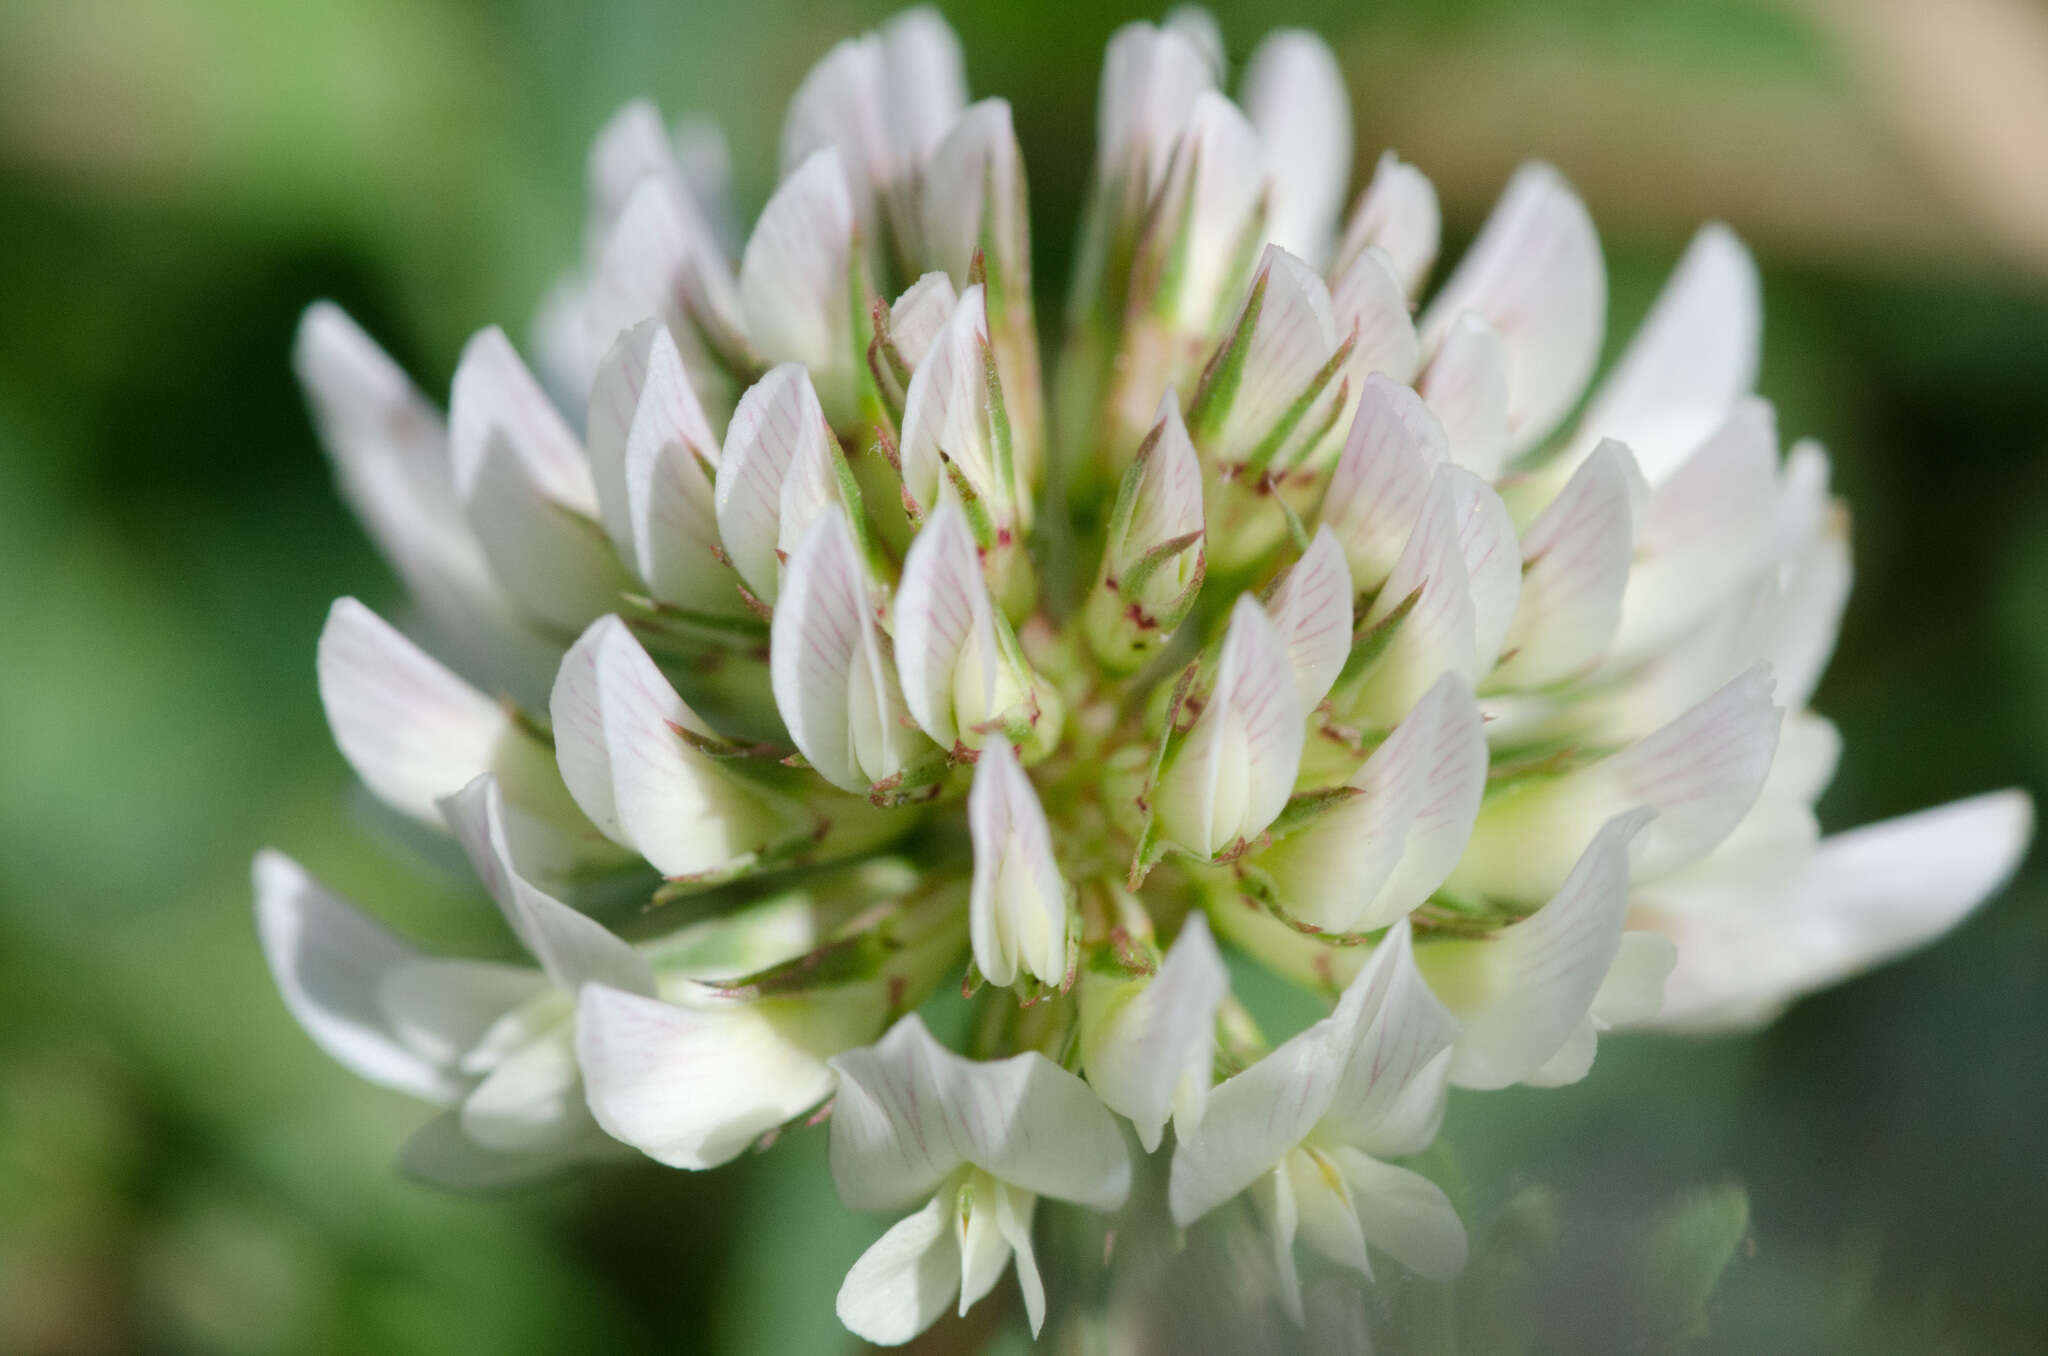 Image of white clover